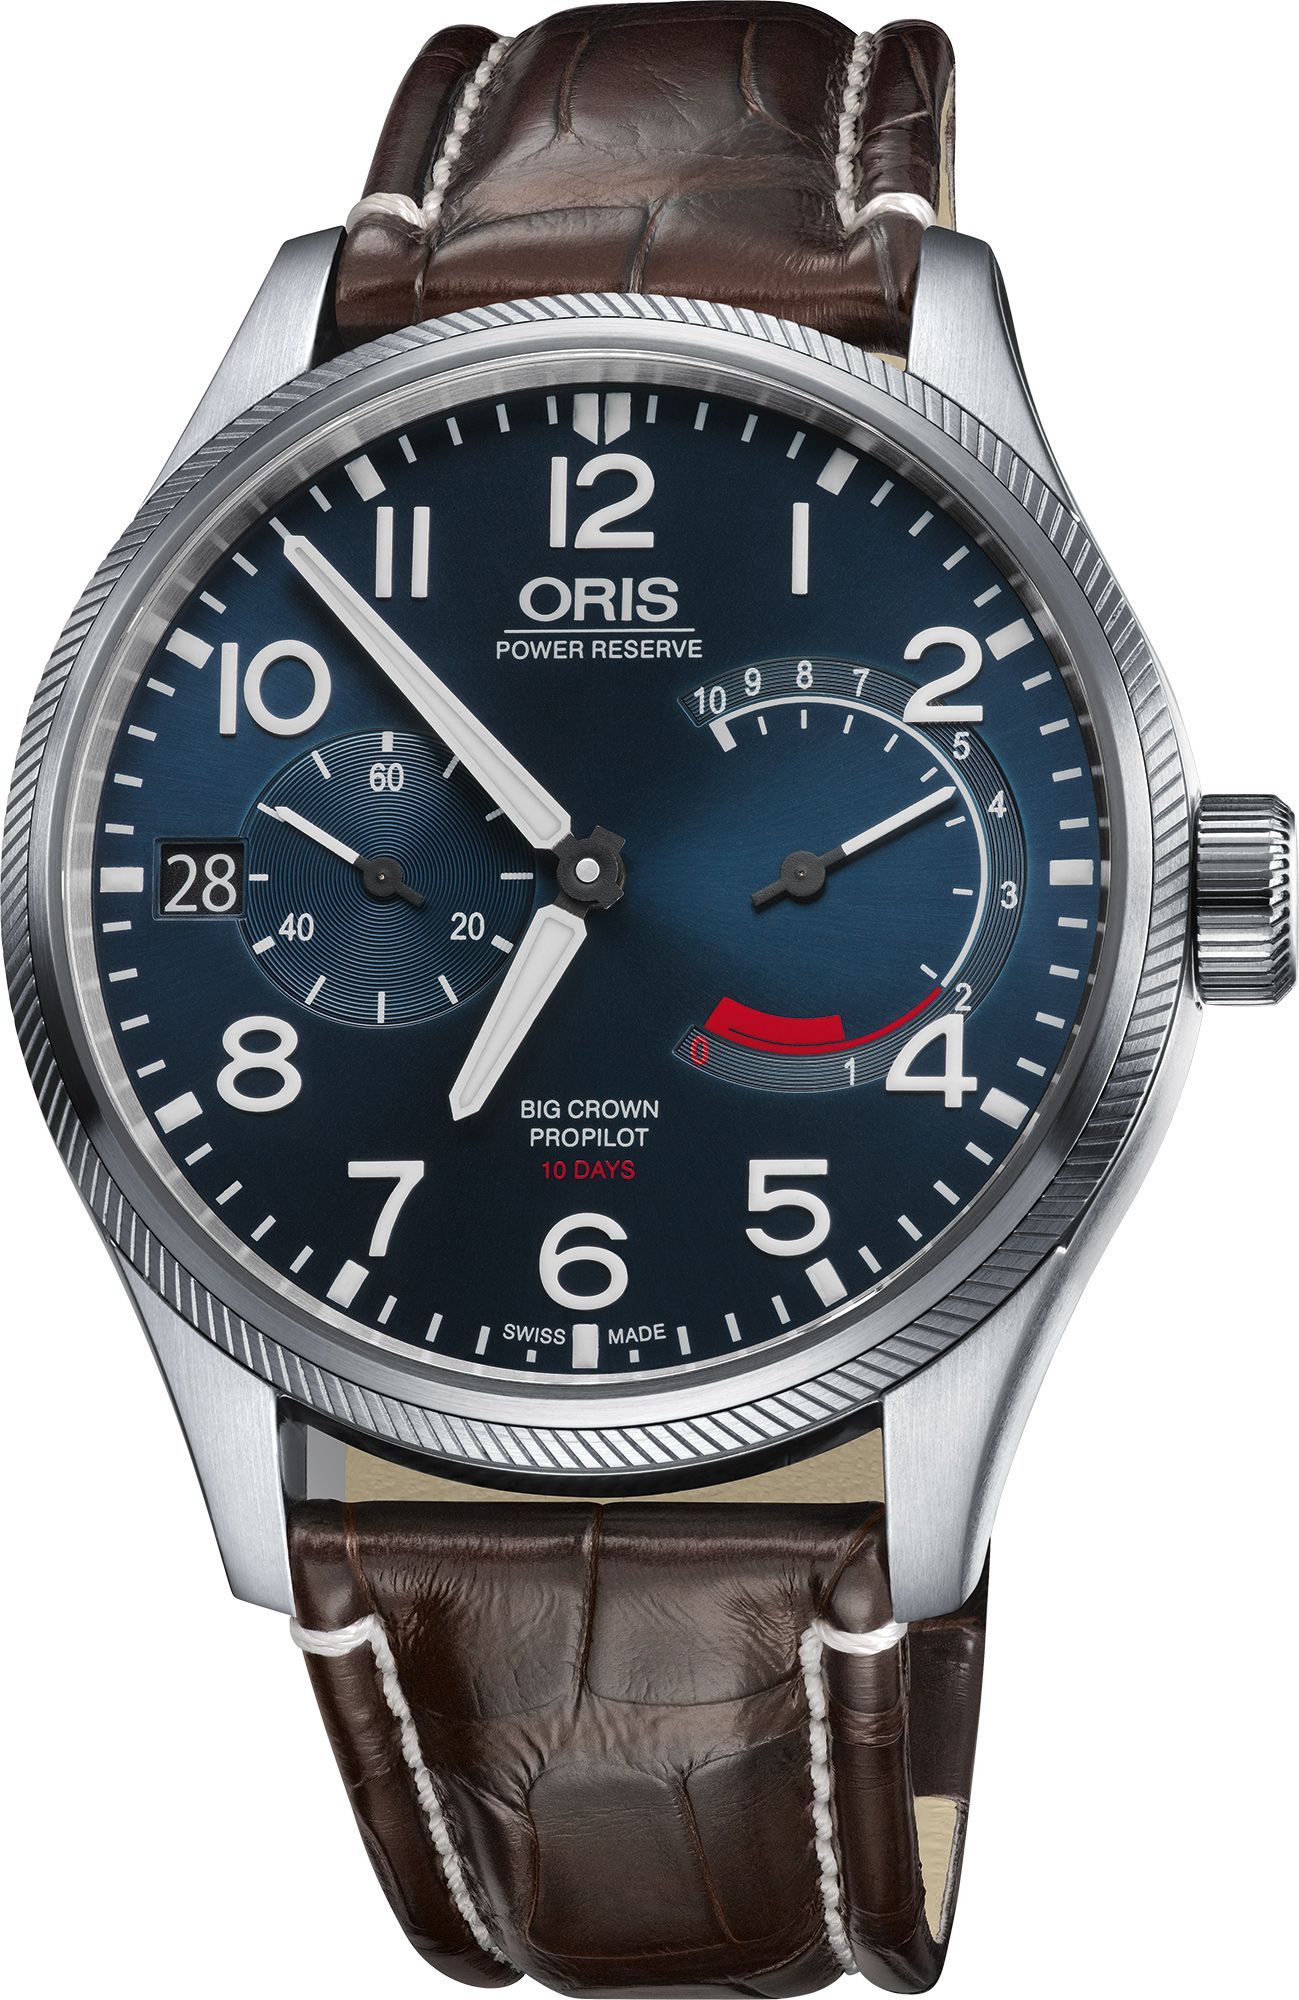 Oris ProPilot Big Crown ProPilot Calibre 111 Blue Dial 44 mm Manual Winding Watch For Men - 1